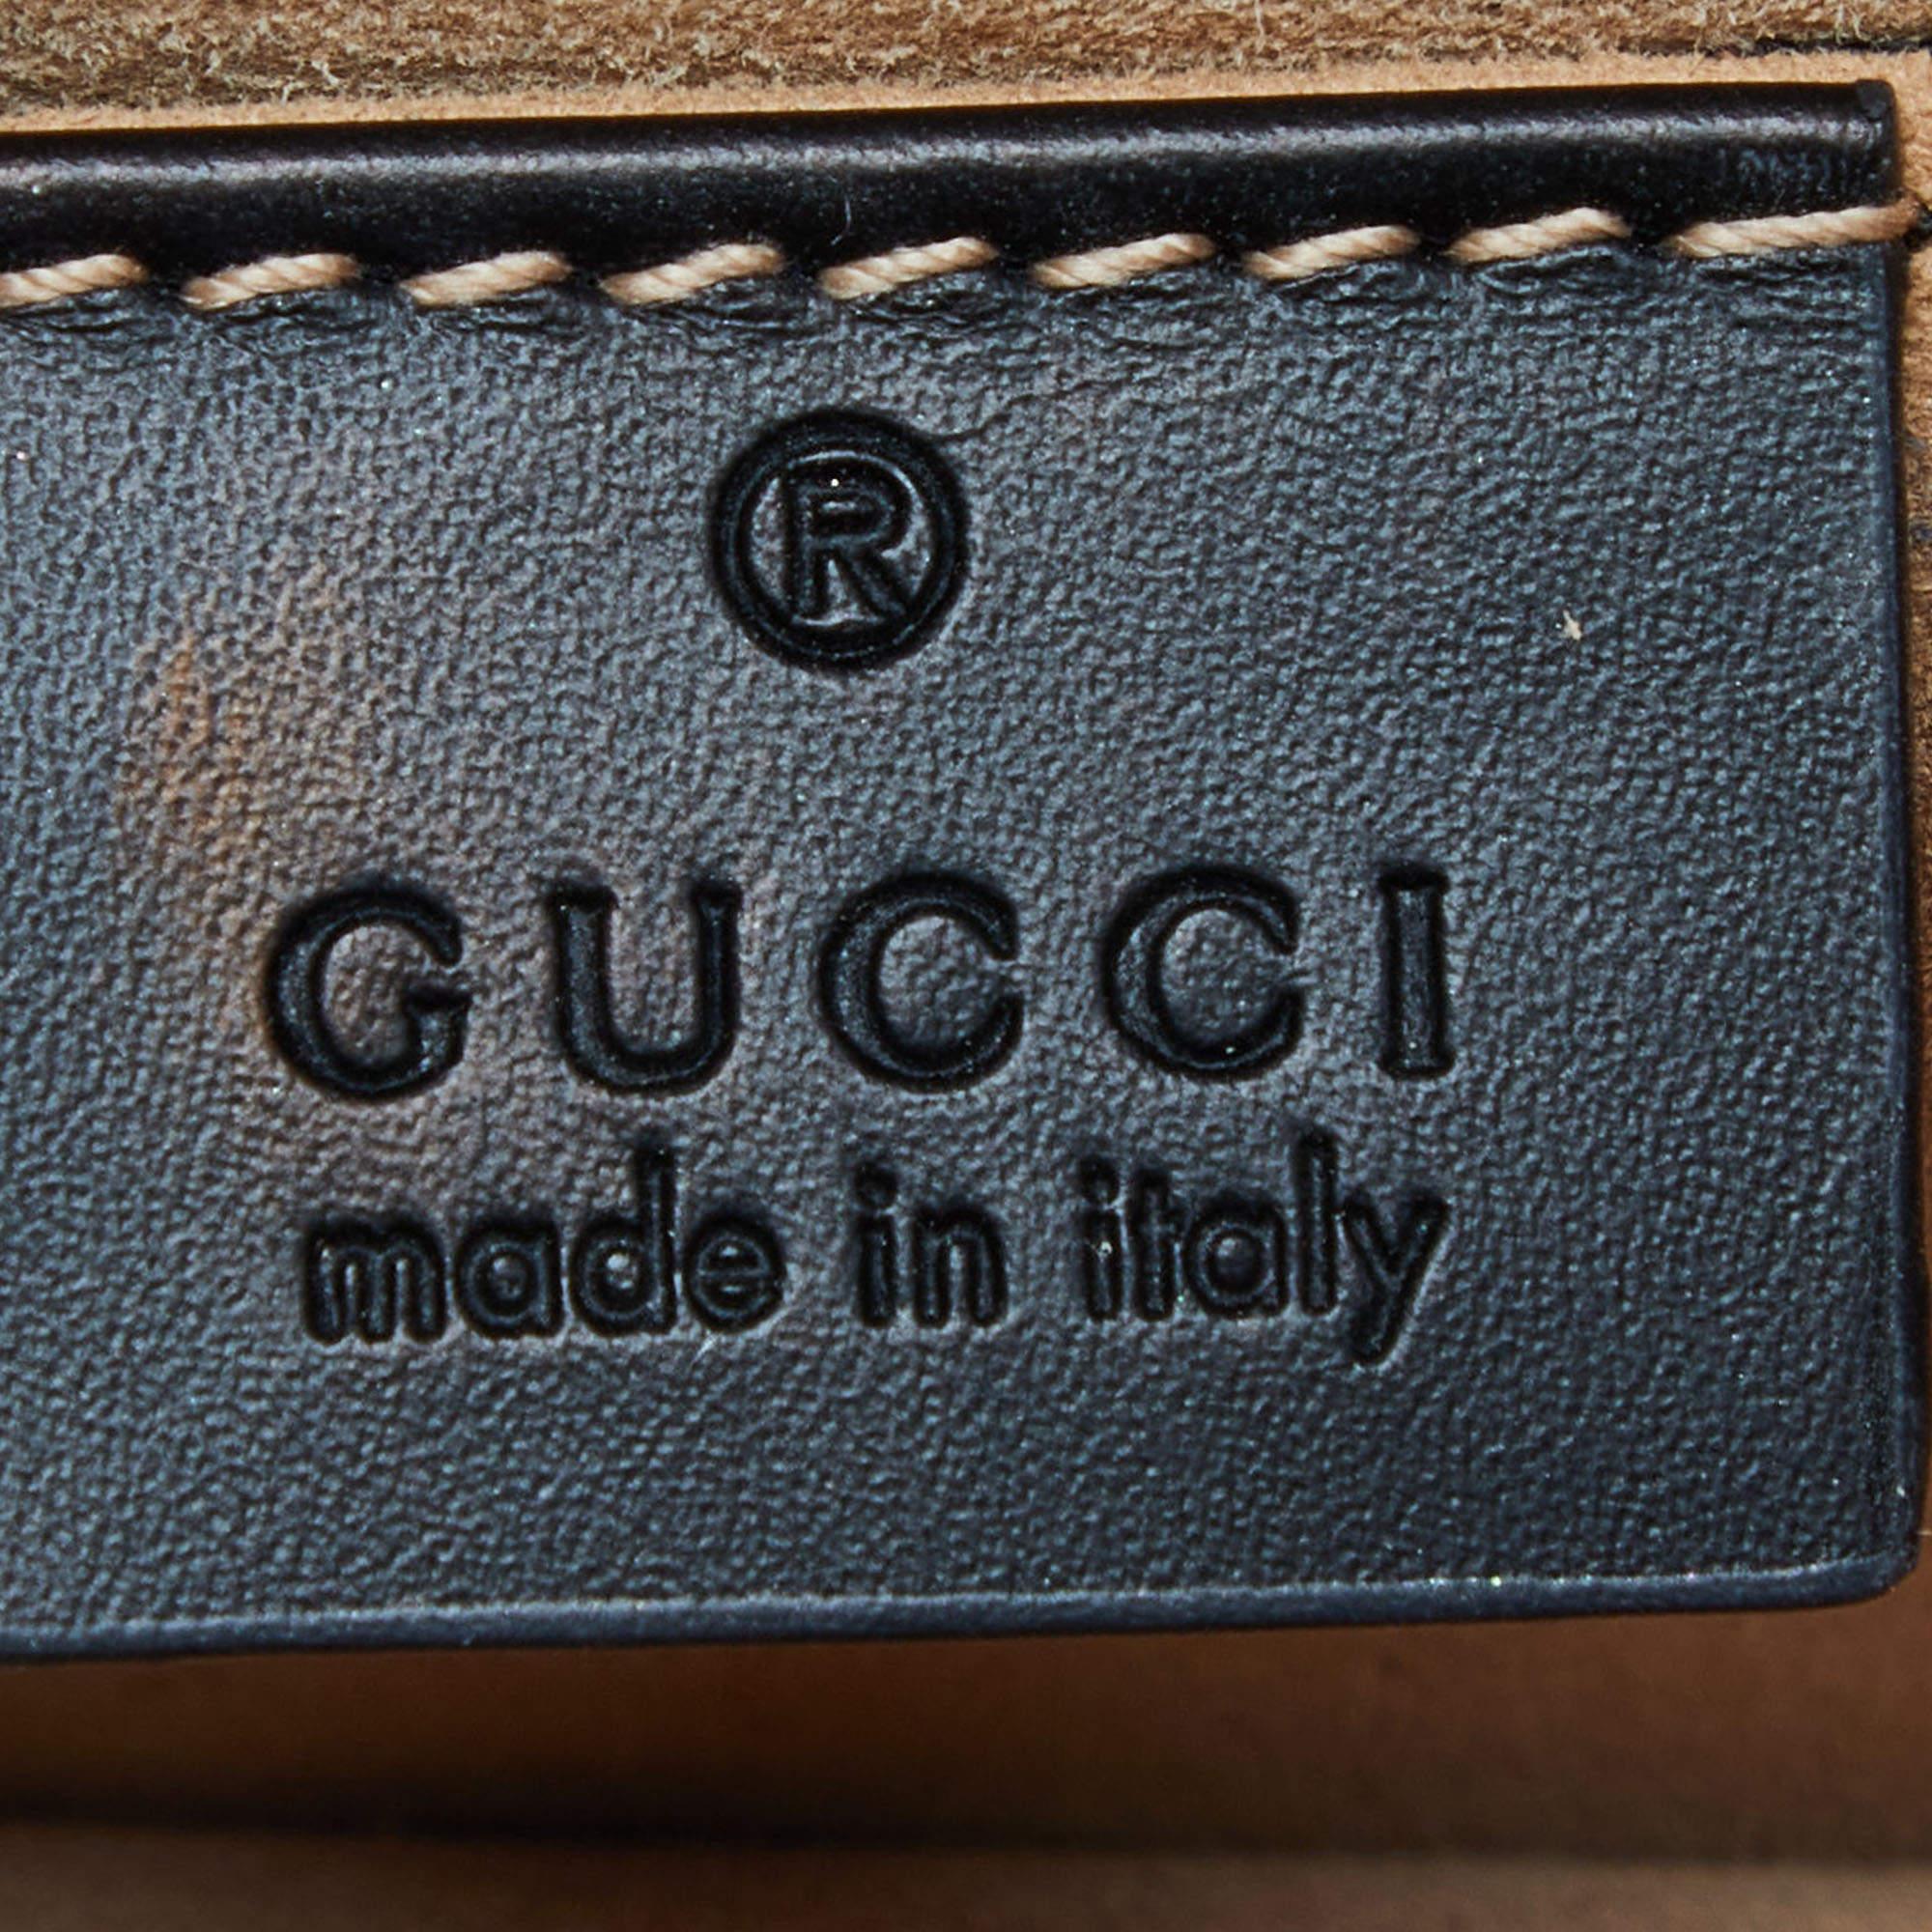 Gucci Black Leather Mini Web Chain Sylvie Top Handle Bag 7